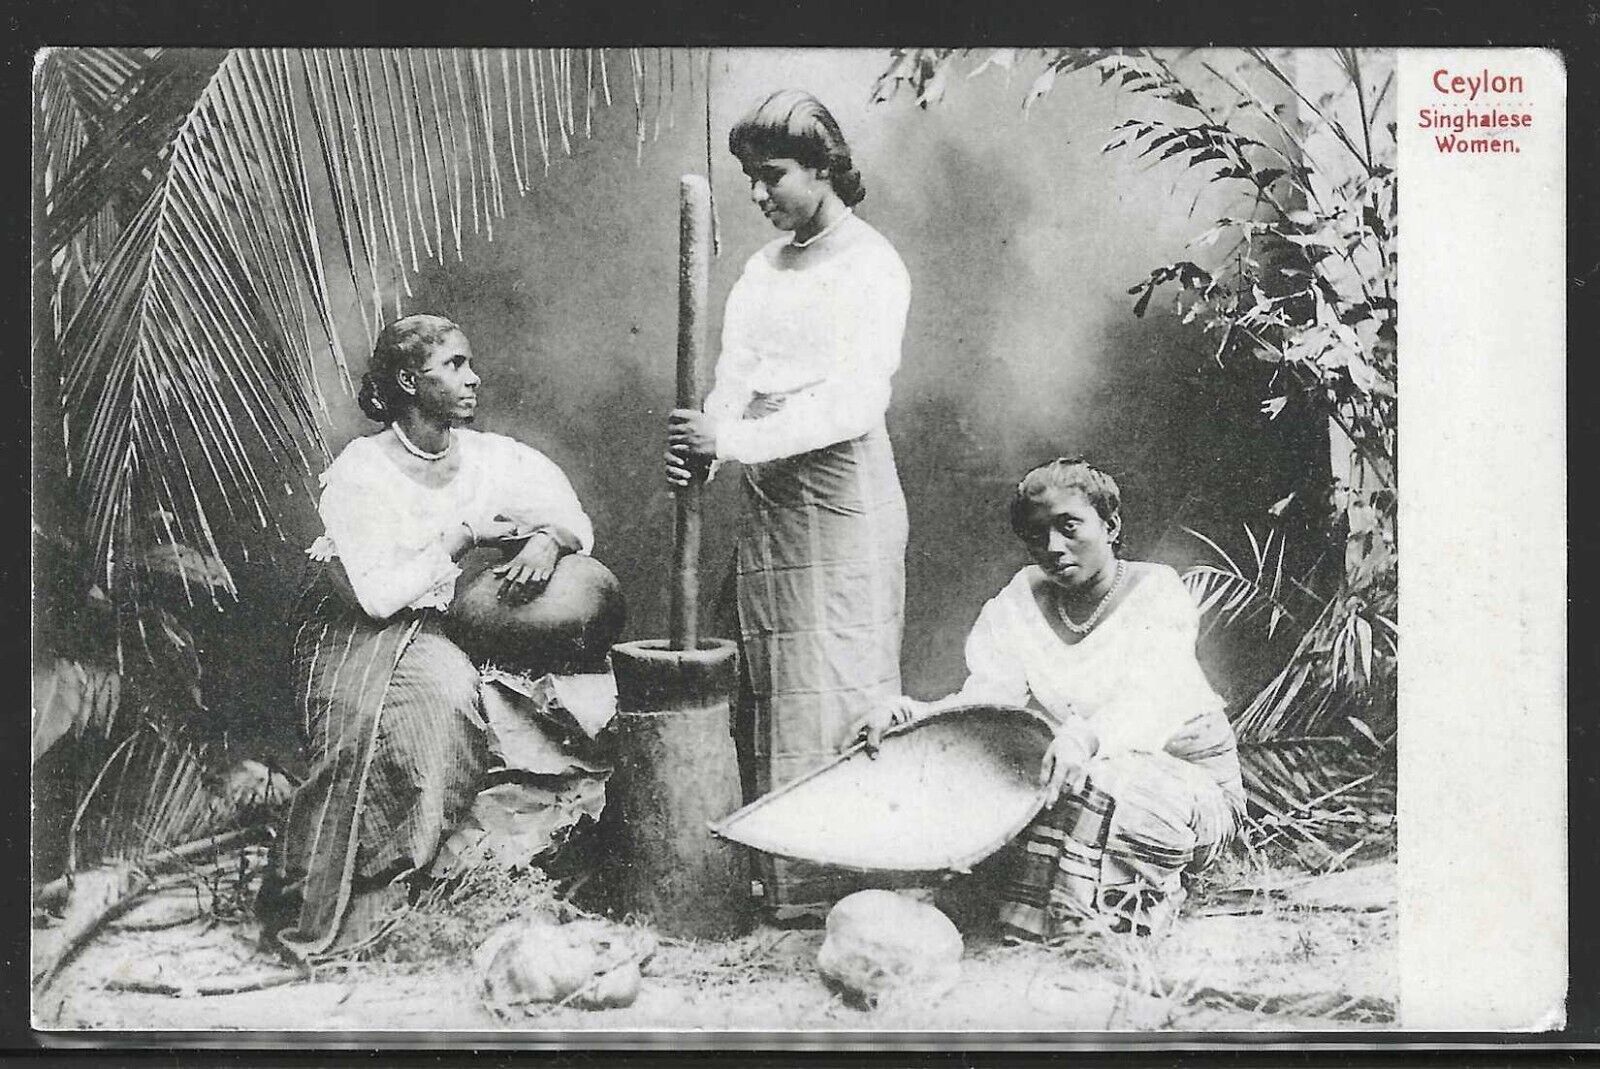 Singhalese Women, Ceylon, 1906  Postcard, 15c Rate, sent to Switzerland